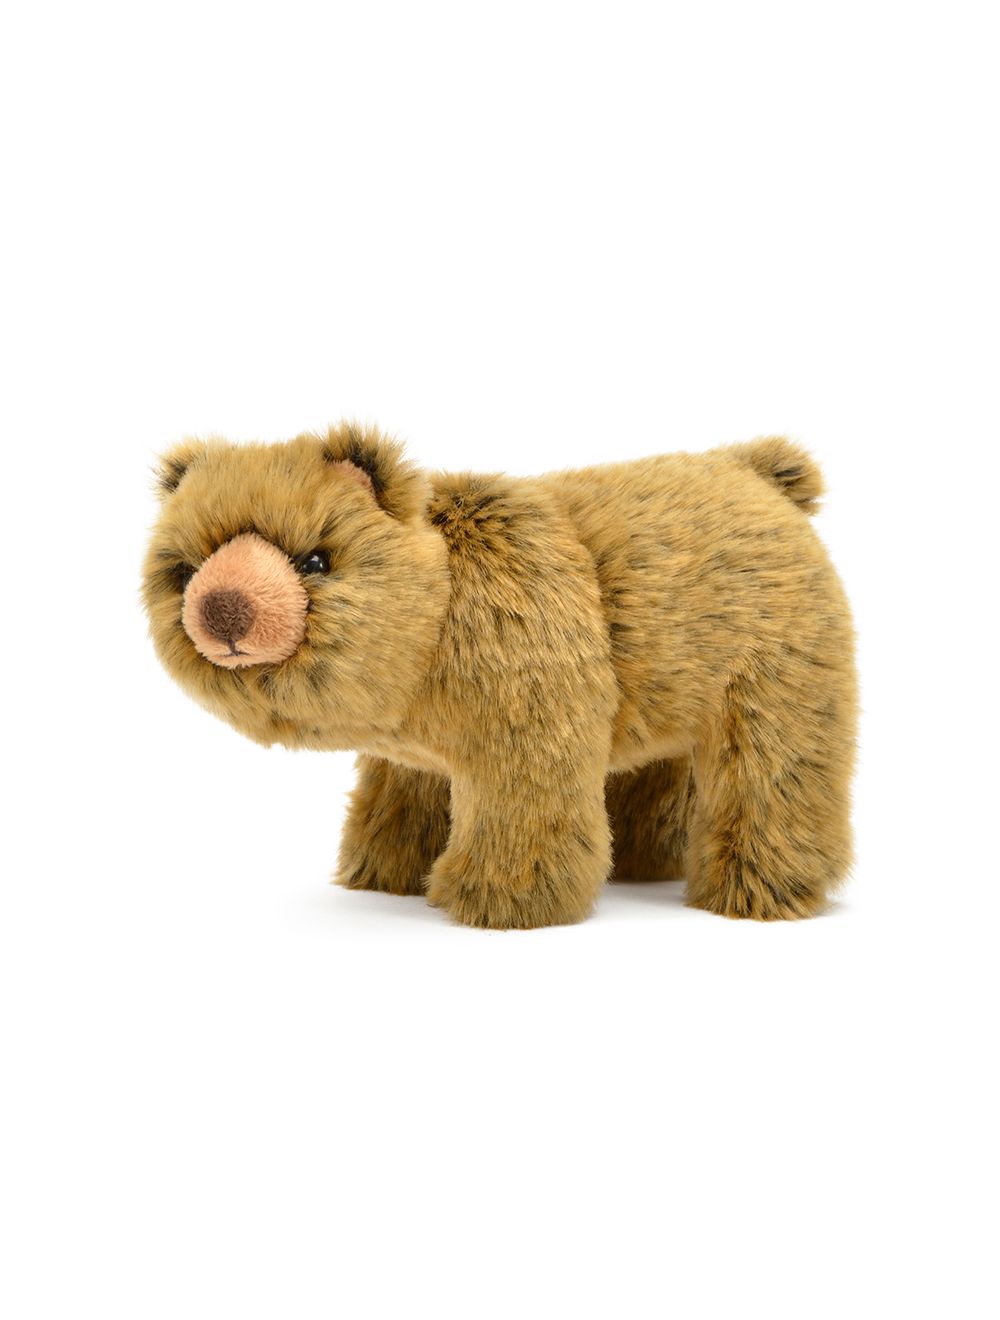 Grizzly Bear Stuffed Animal